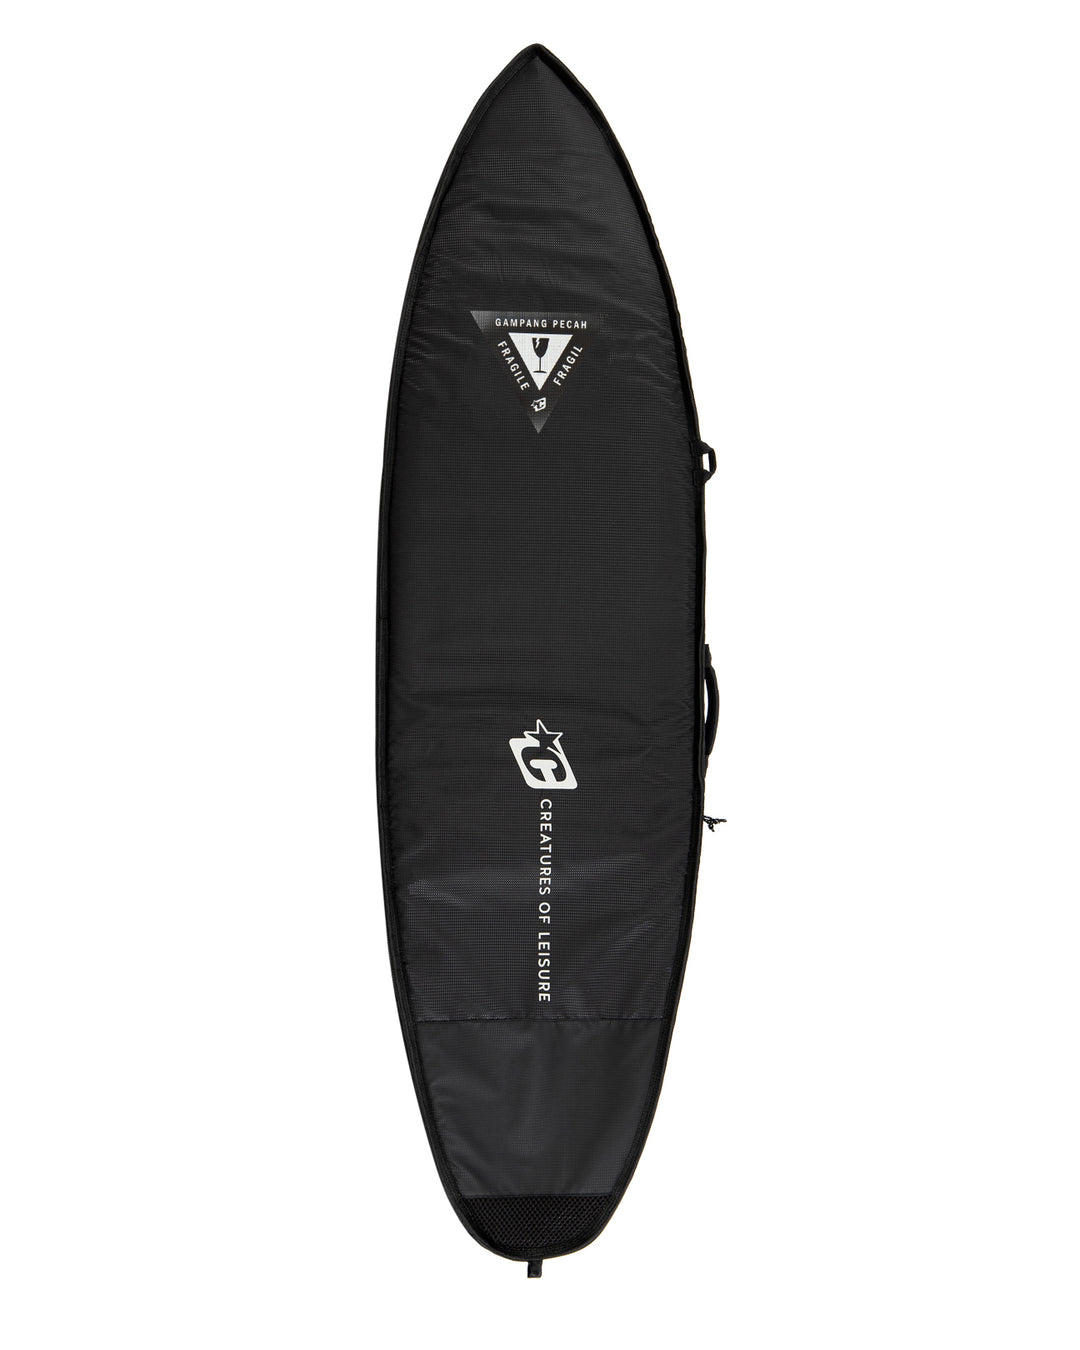 Shortboard Travel DT2.0 Surfboard Cover